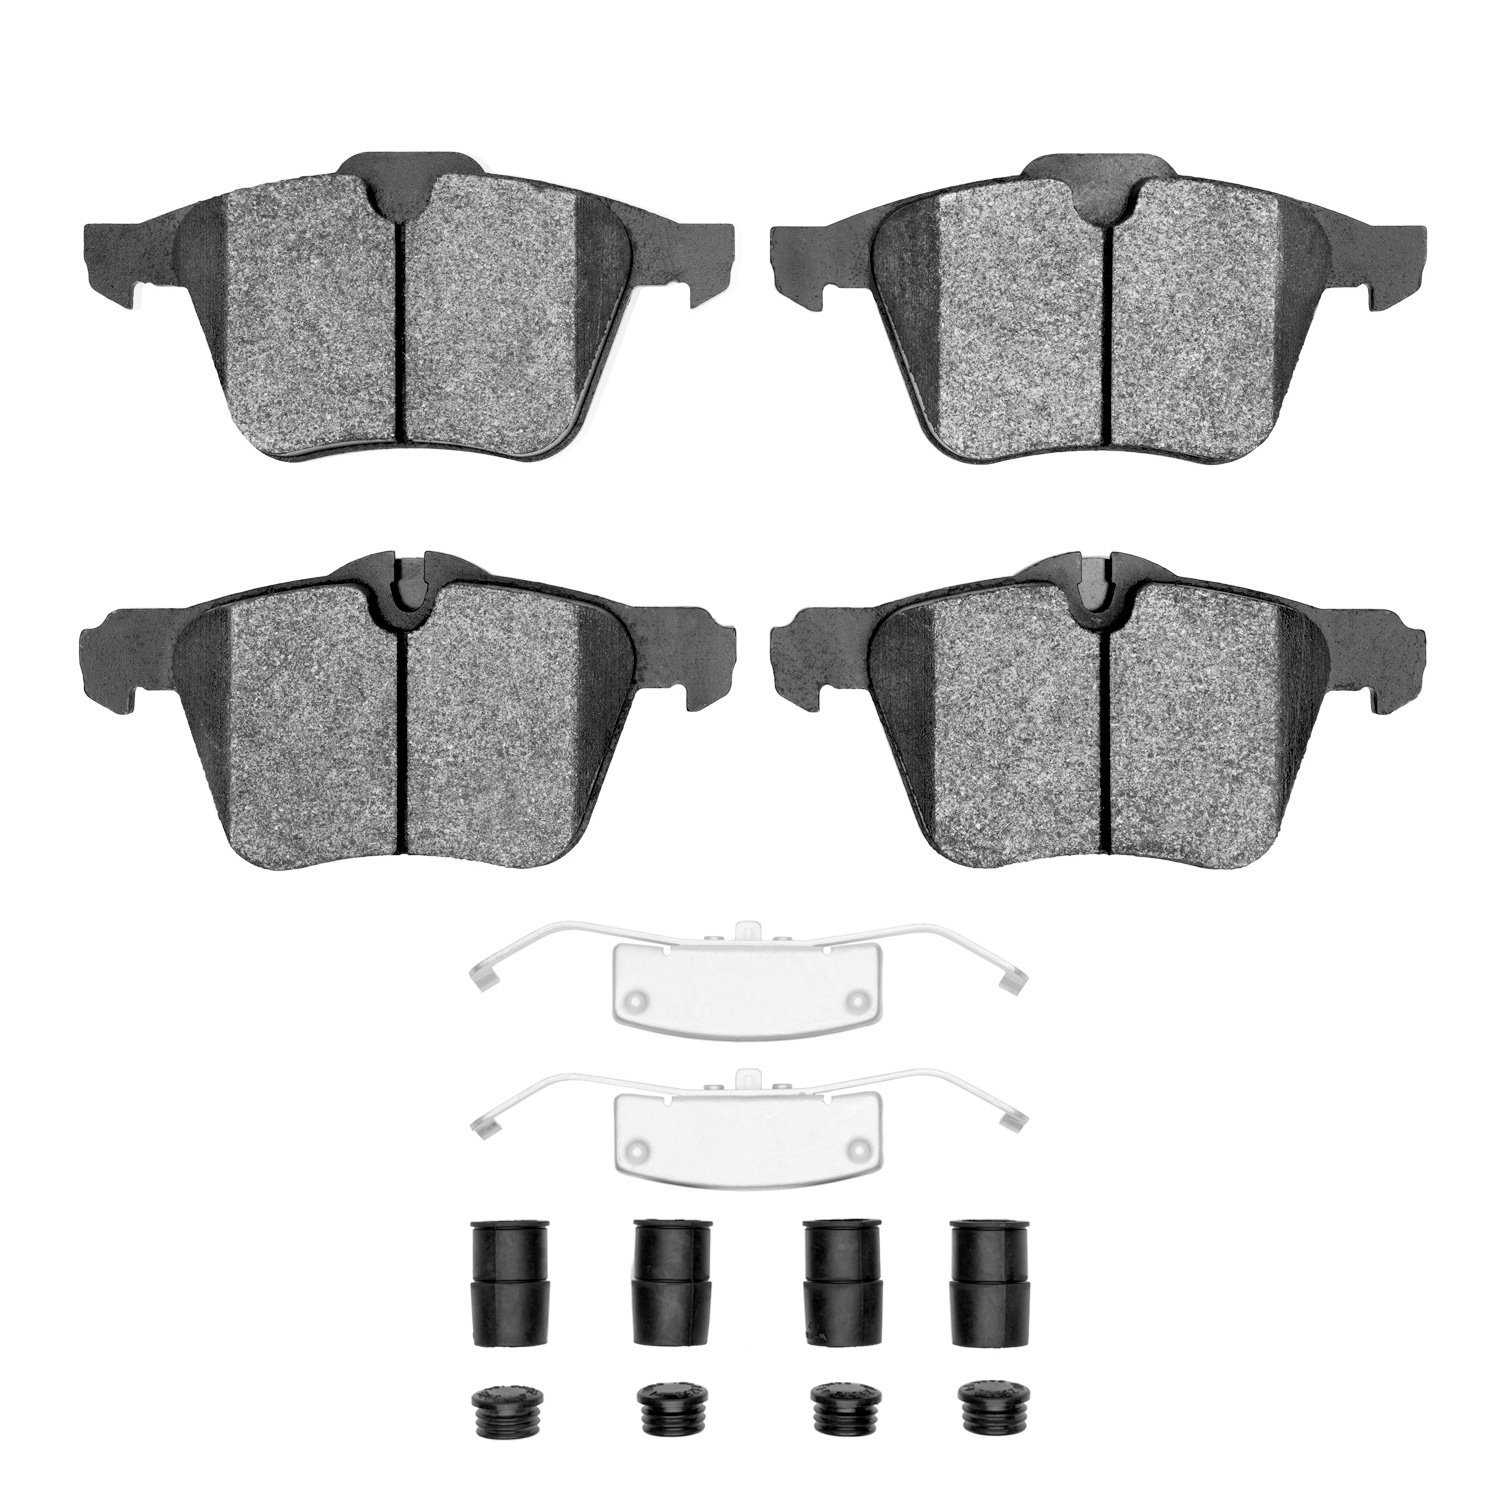 Euro Ceramic Brake Pads & Hardware Kit, 2010-2019 Jaguar, Position: Front